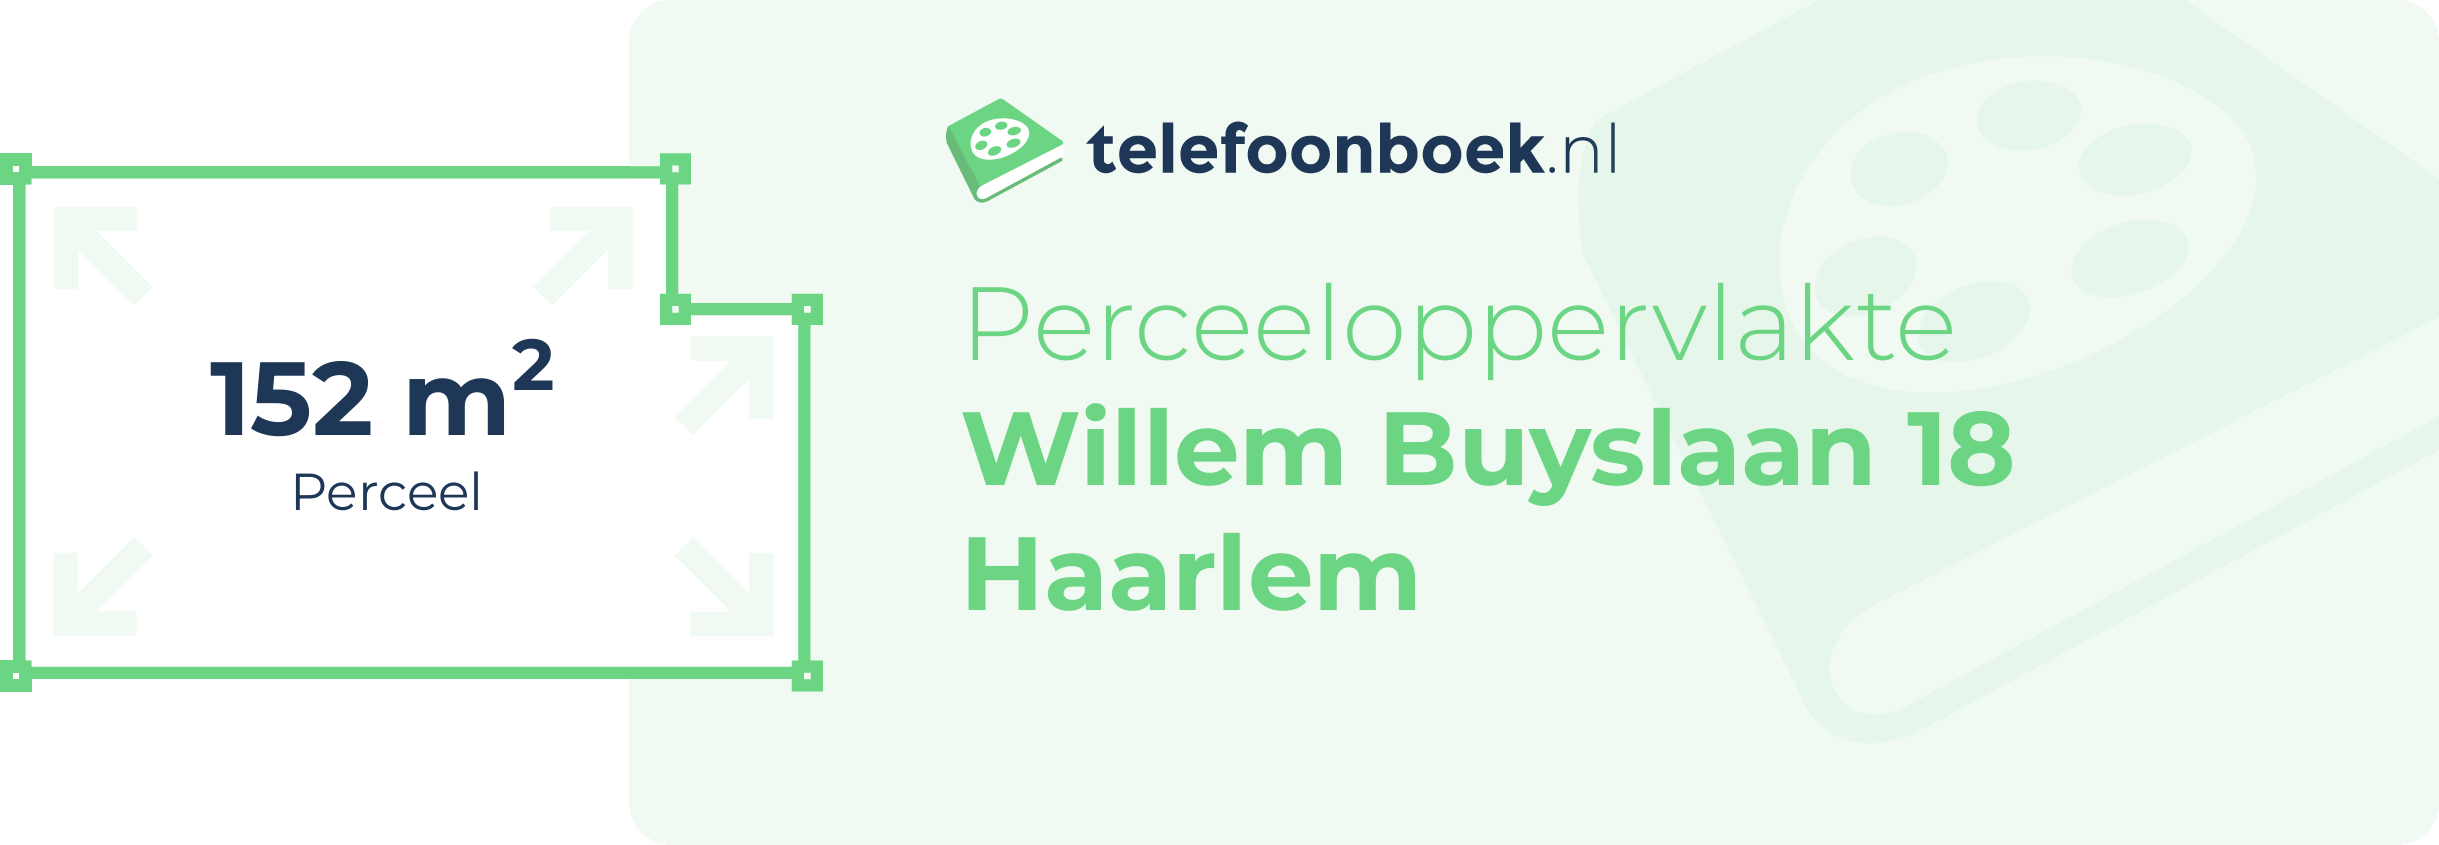 Perceeloppervlakte Willem Buyslaan 18 Haarlem